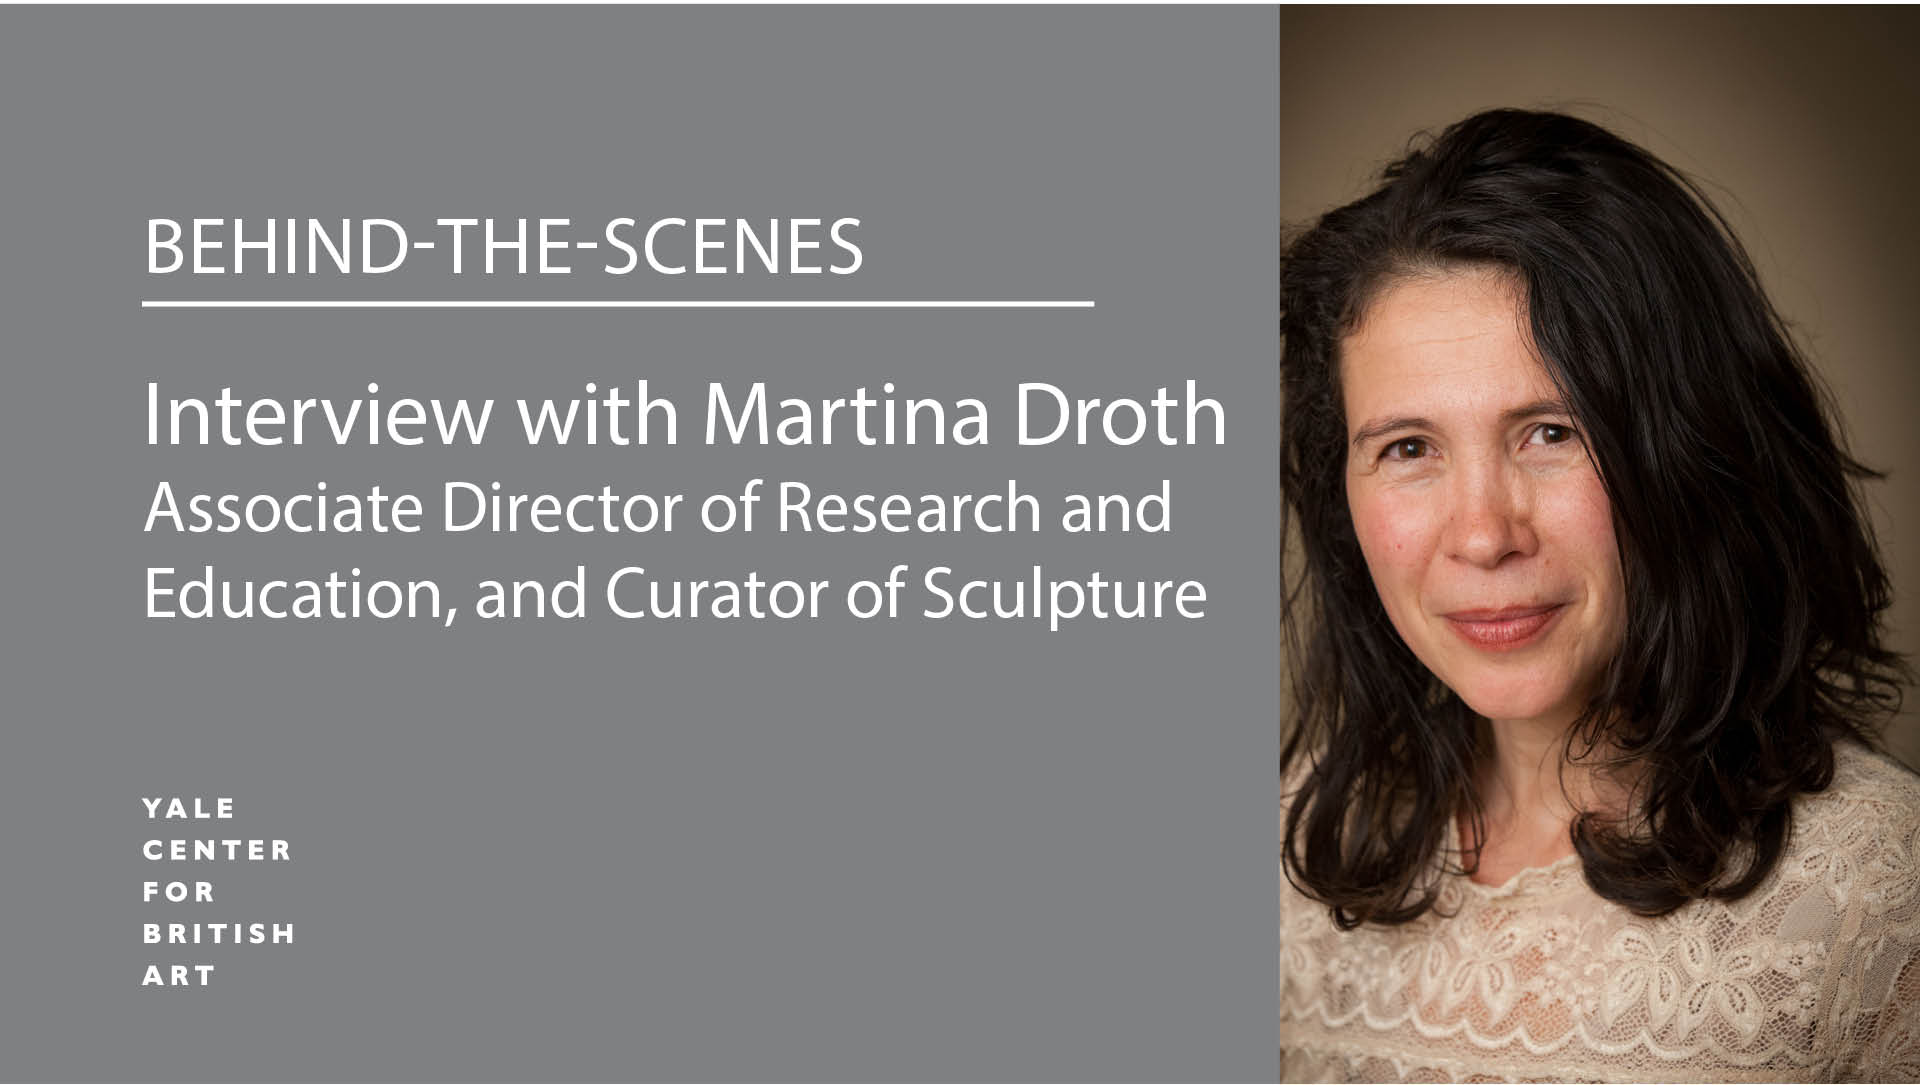 Martina Droth: A Different Look at Sculpture